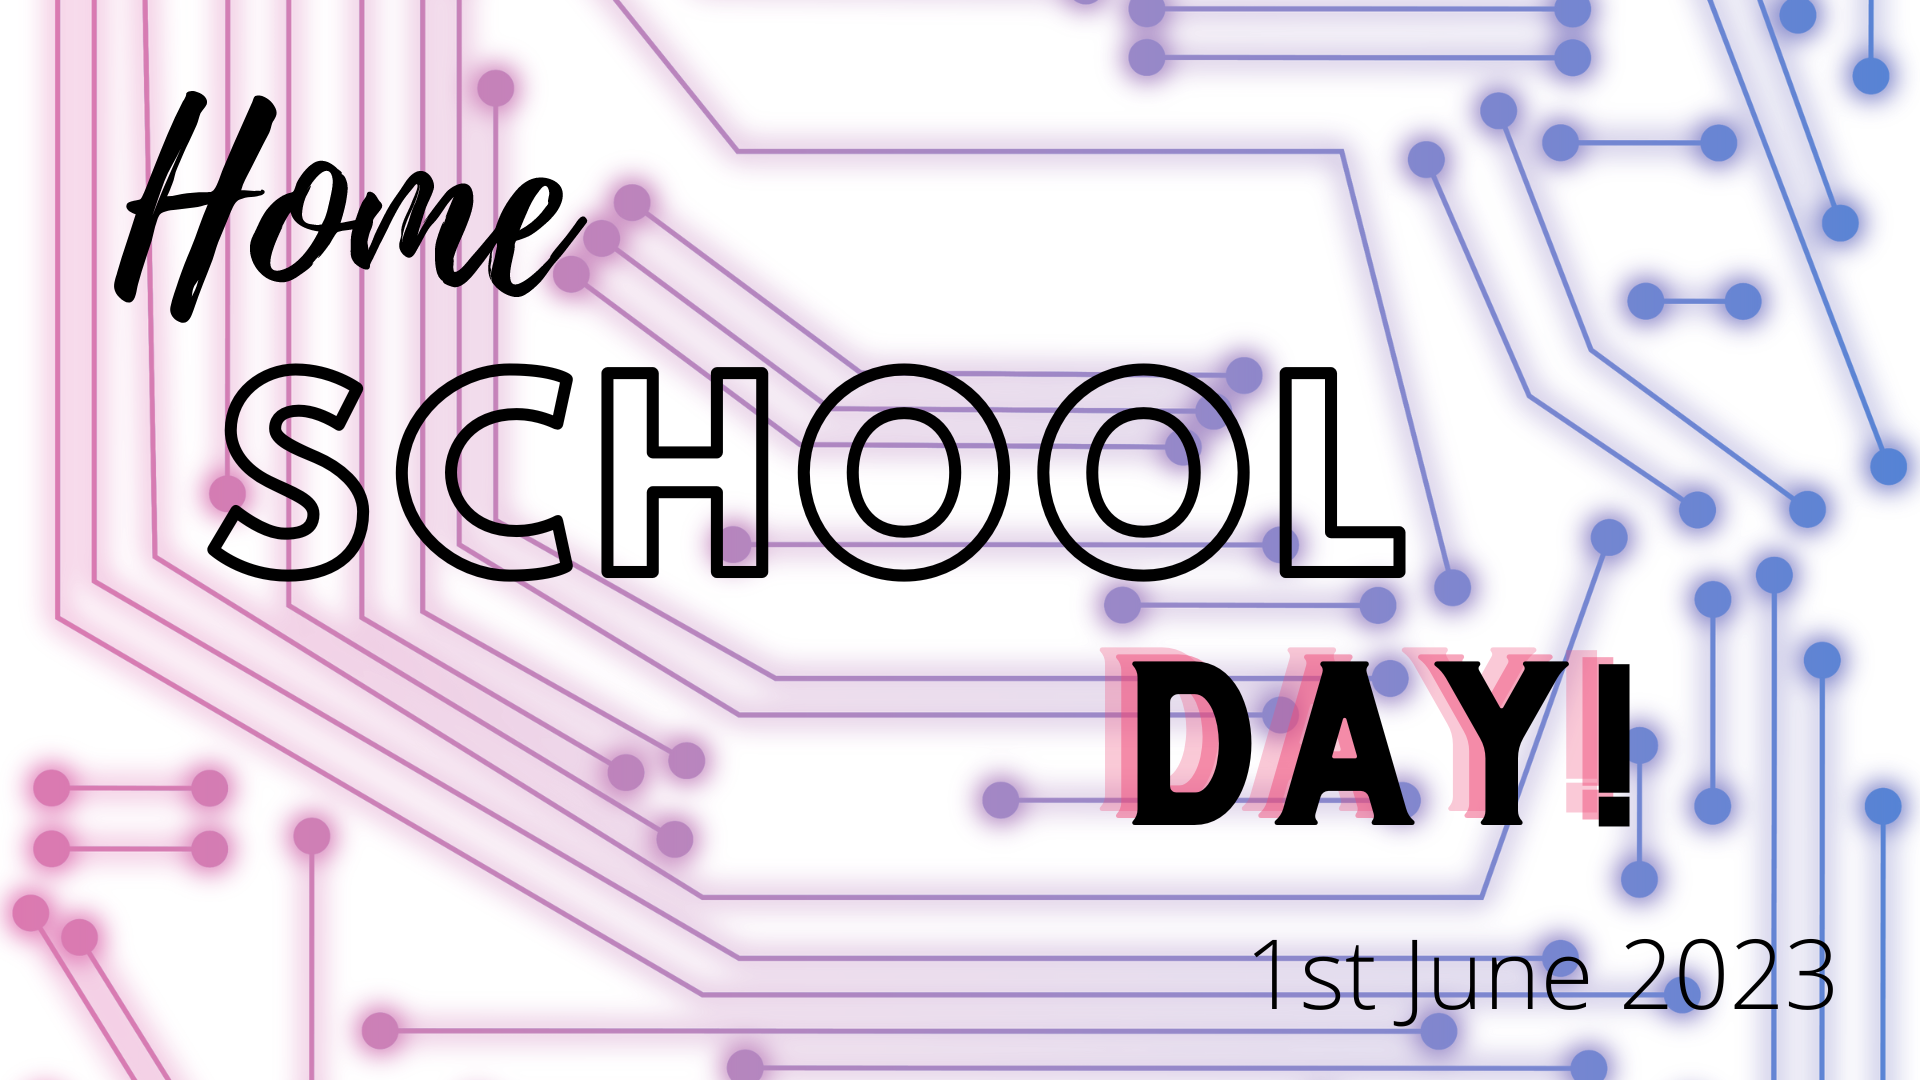 Home School Day 1st June 2023!